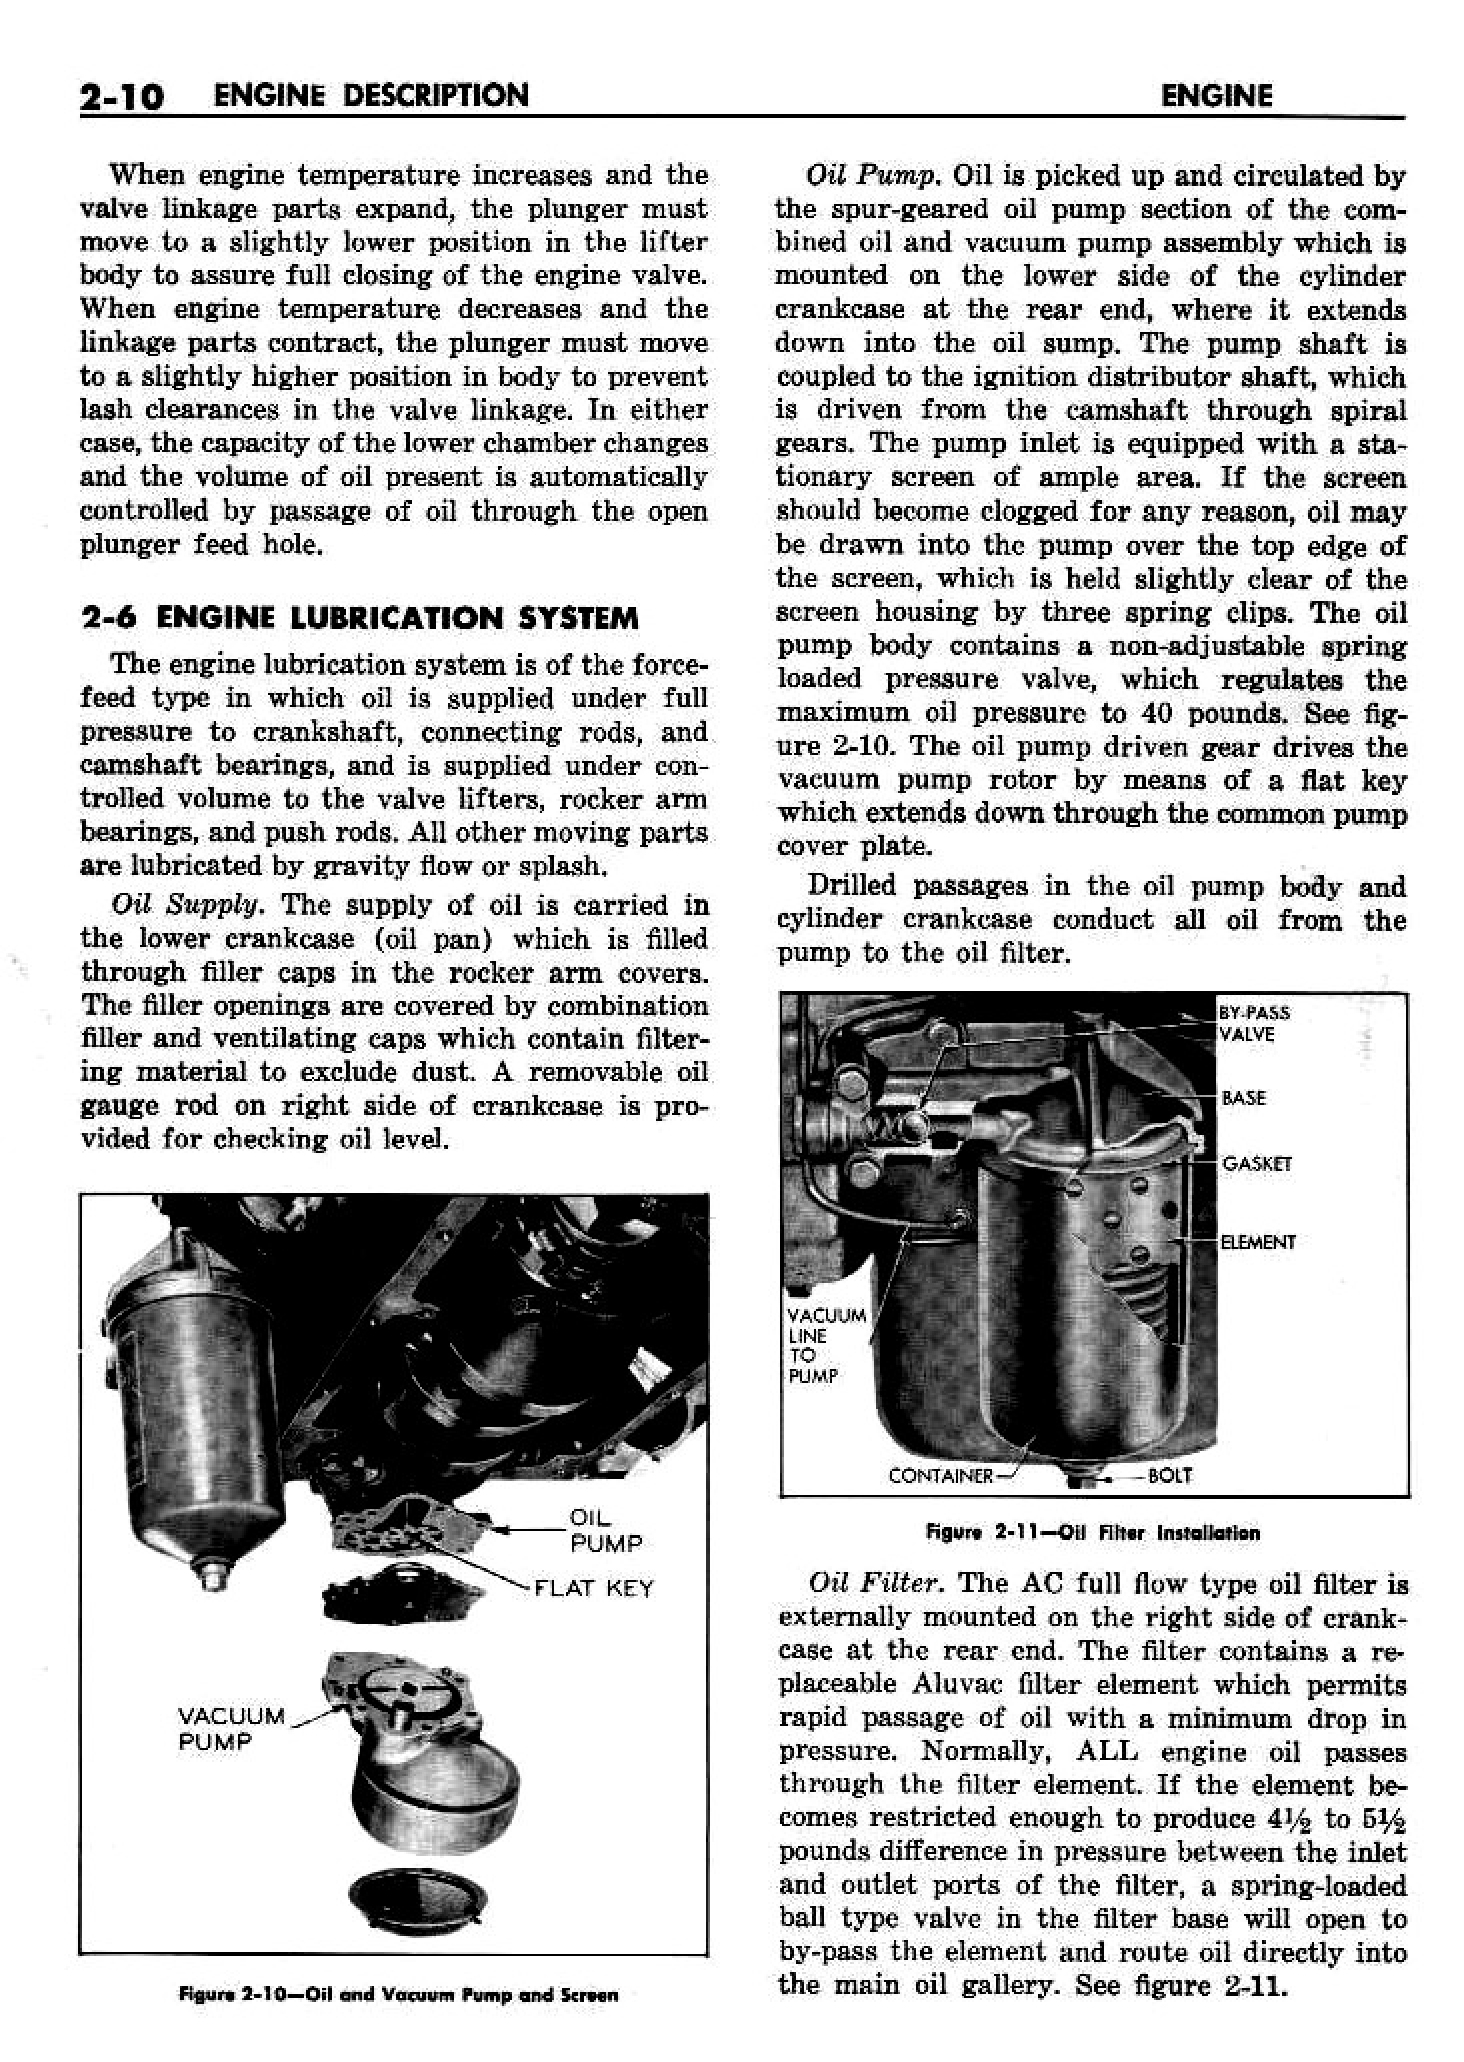 n_03 1958 Buick Shop Manual - Engine_10.jpg